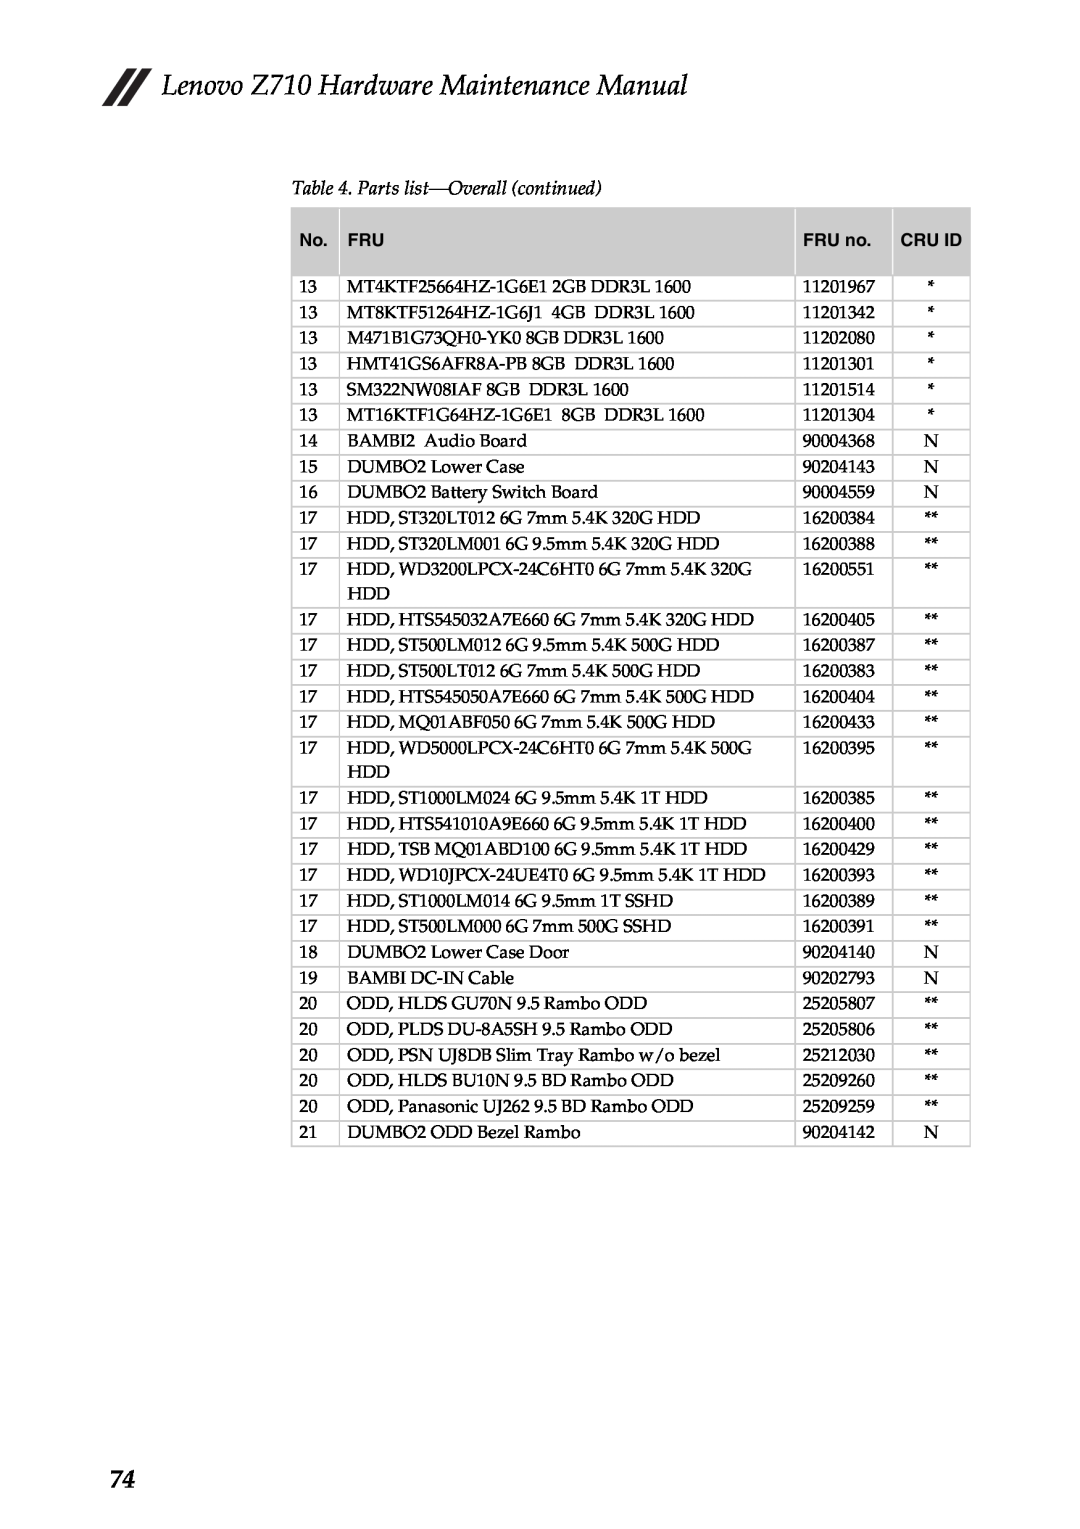 Lenovo manual Parts list-Overall continued, Lenovo Z710 Hardware Maintenance Manual, FRU no, Cru Id 